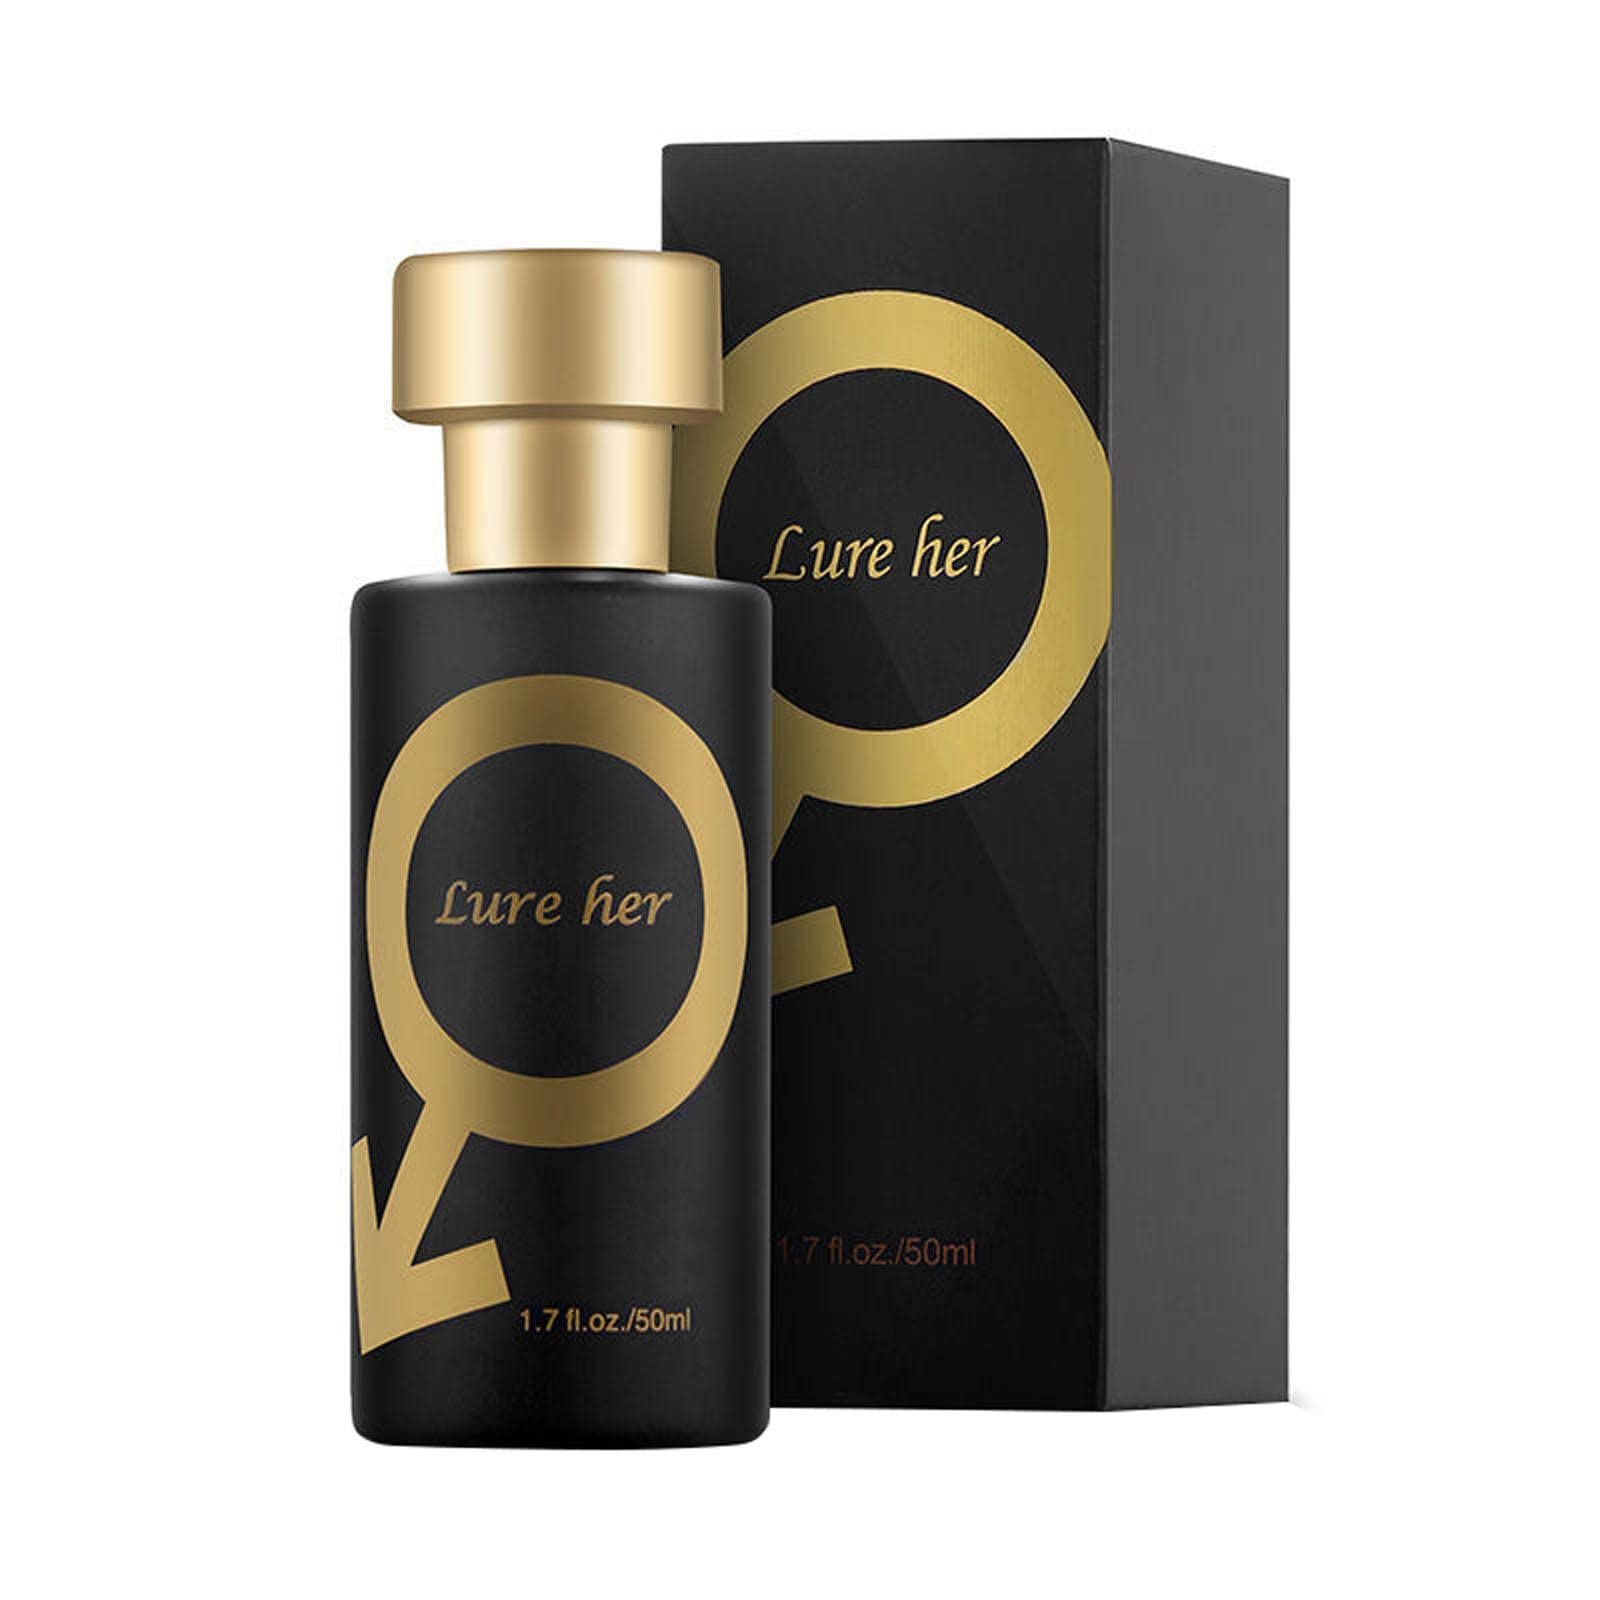  Vwlvrsco Golden Lure Perfume, Lure Her Perfume for Men, Cologne  for Men Attract Women, Romantic Glitter Perfume Gift (Women) : Beauty &  Personal Care